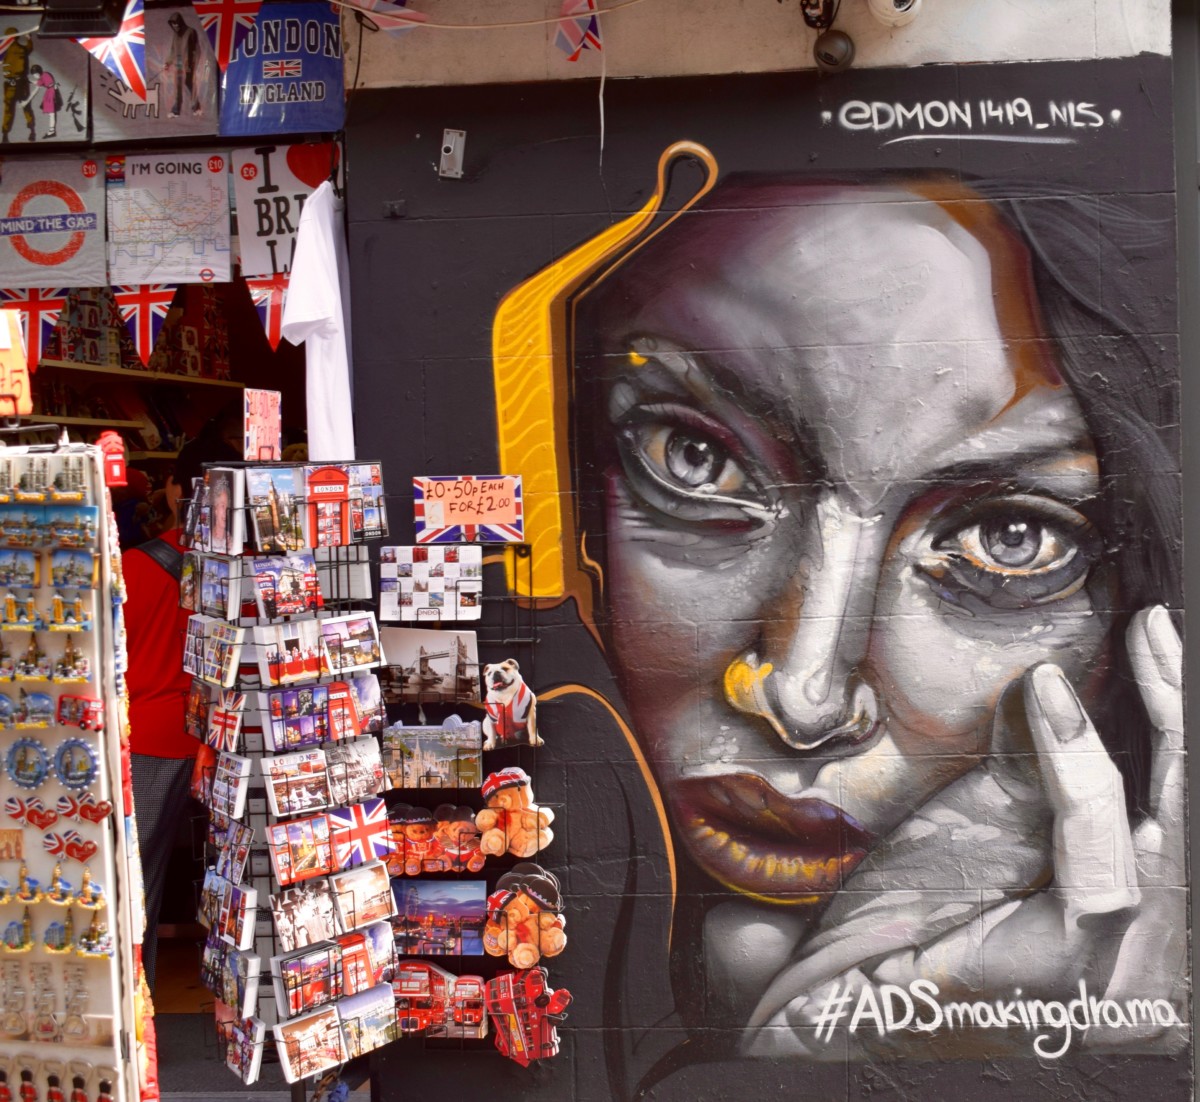 London Street Art